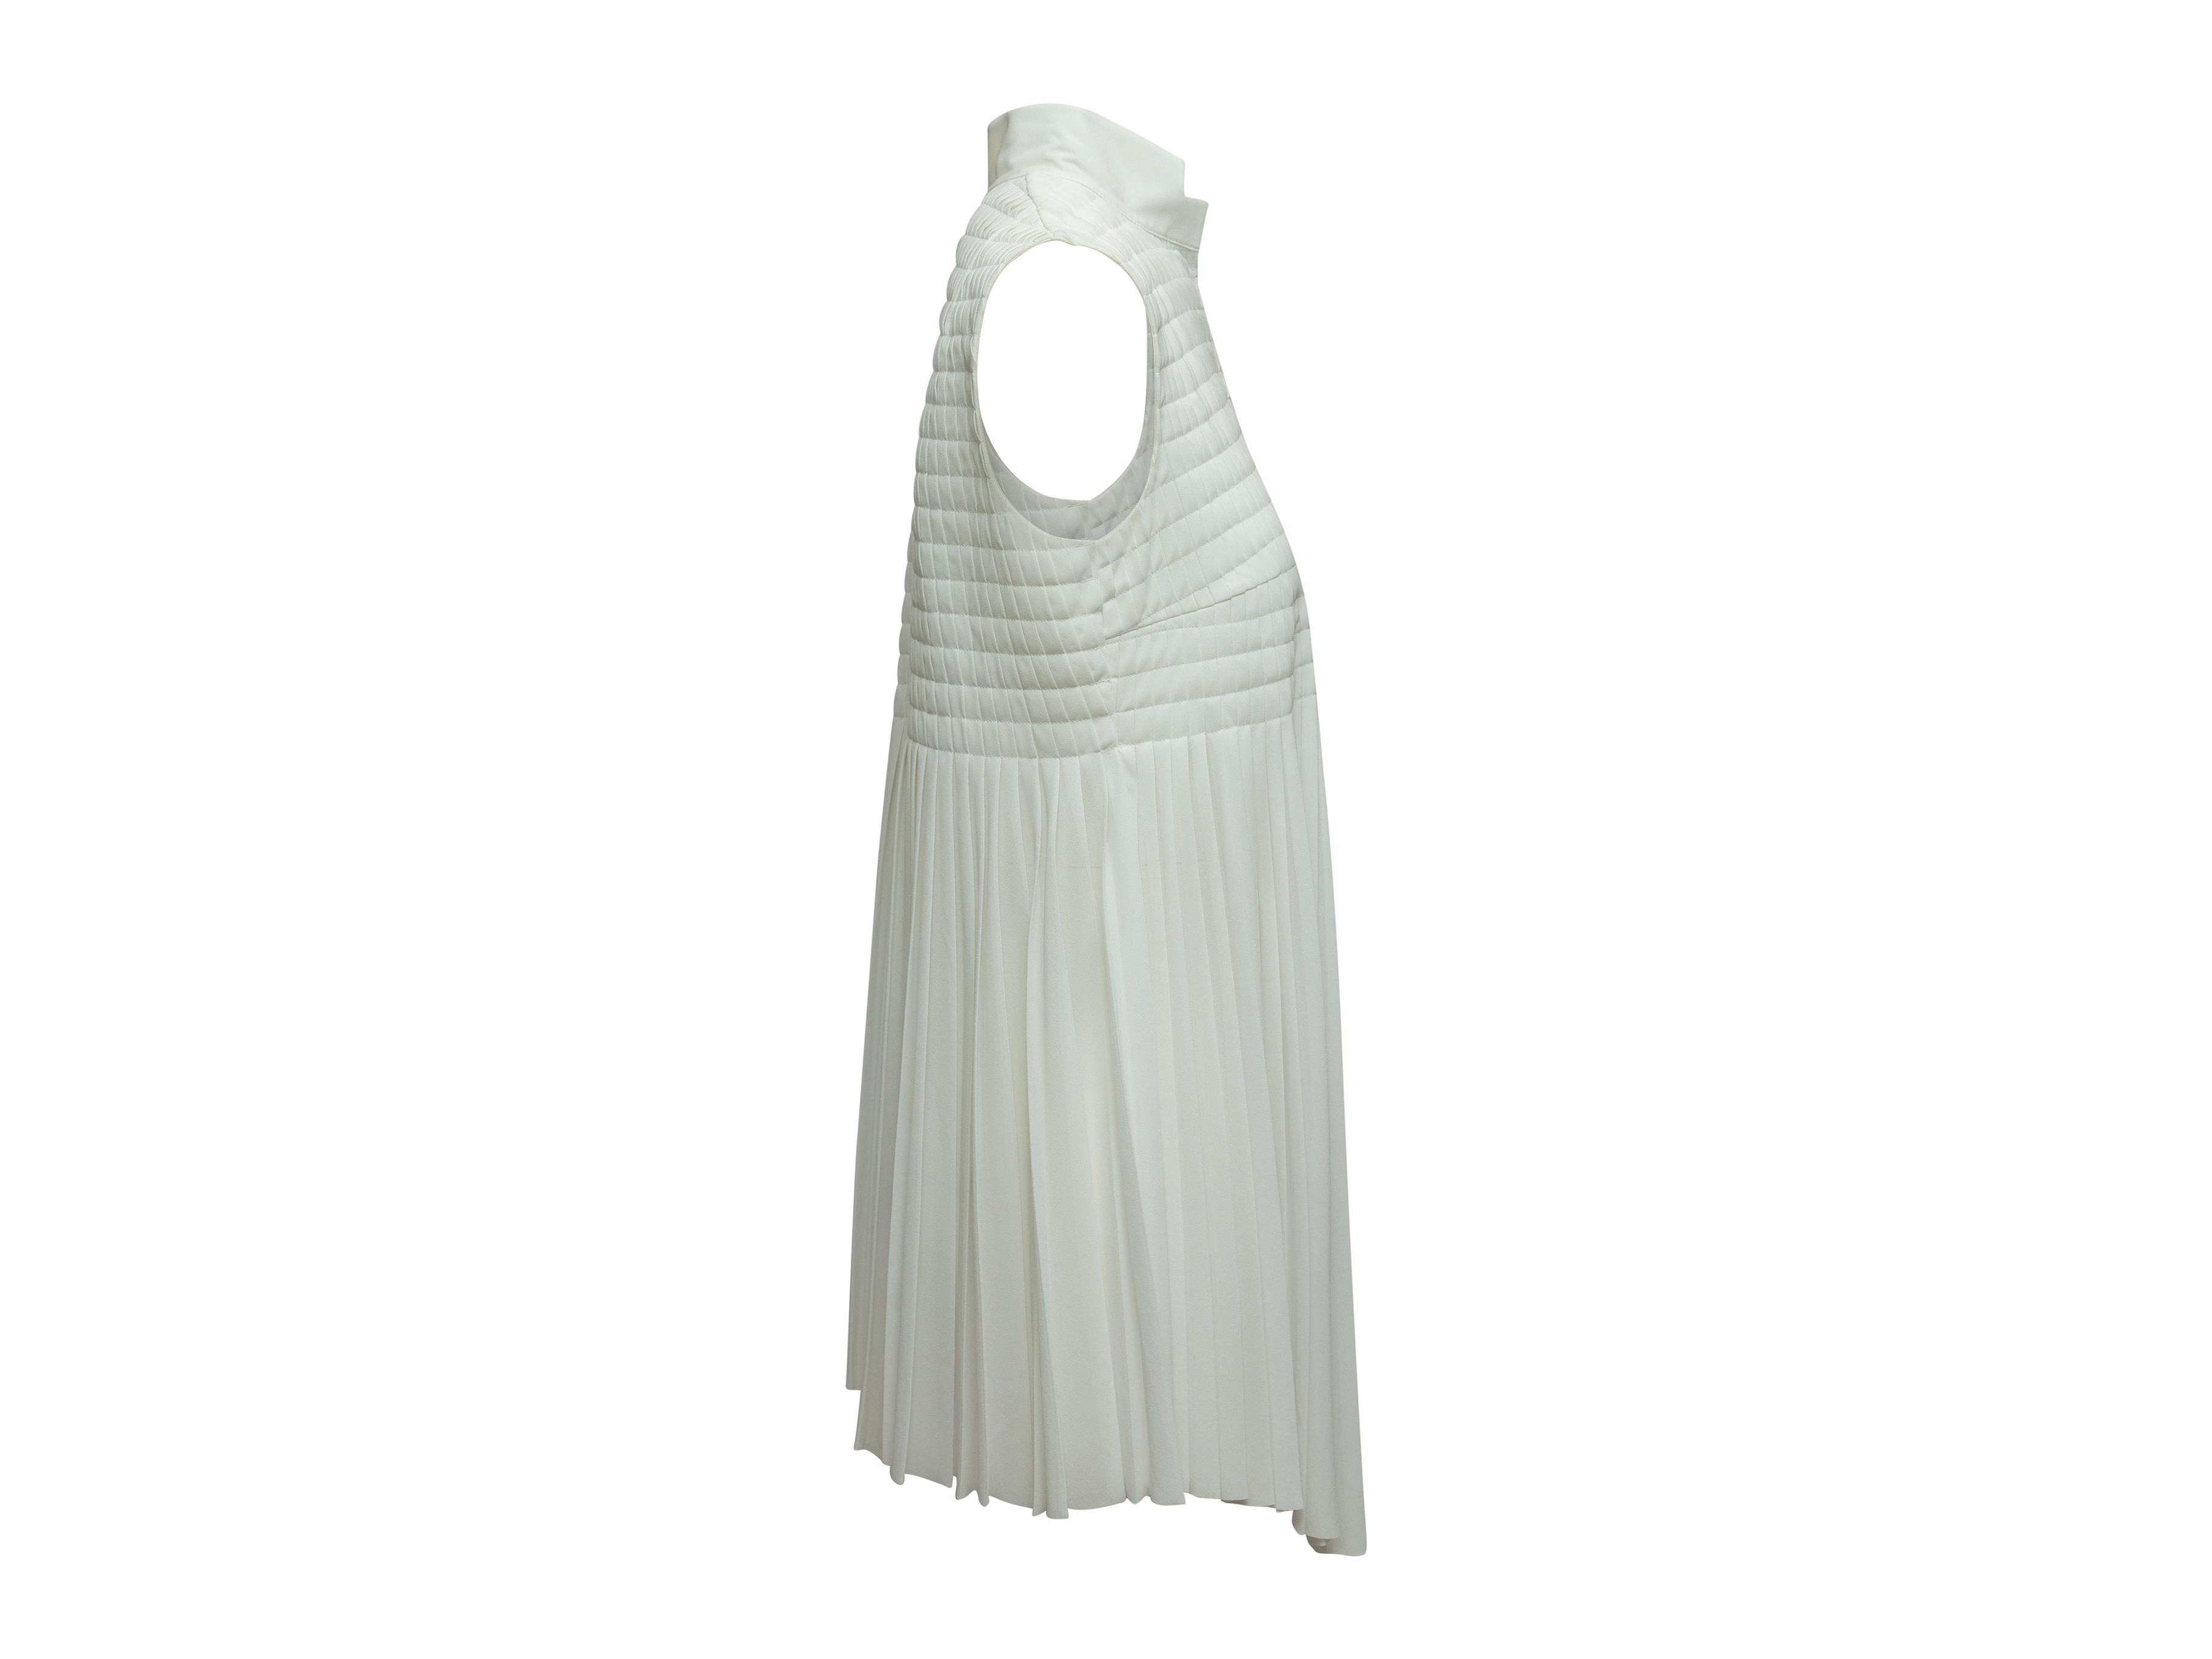 Product details: White sleeveless pleated top by Akris. V-neck. Asymmetrical hem. 34